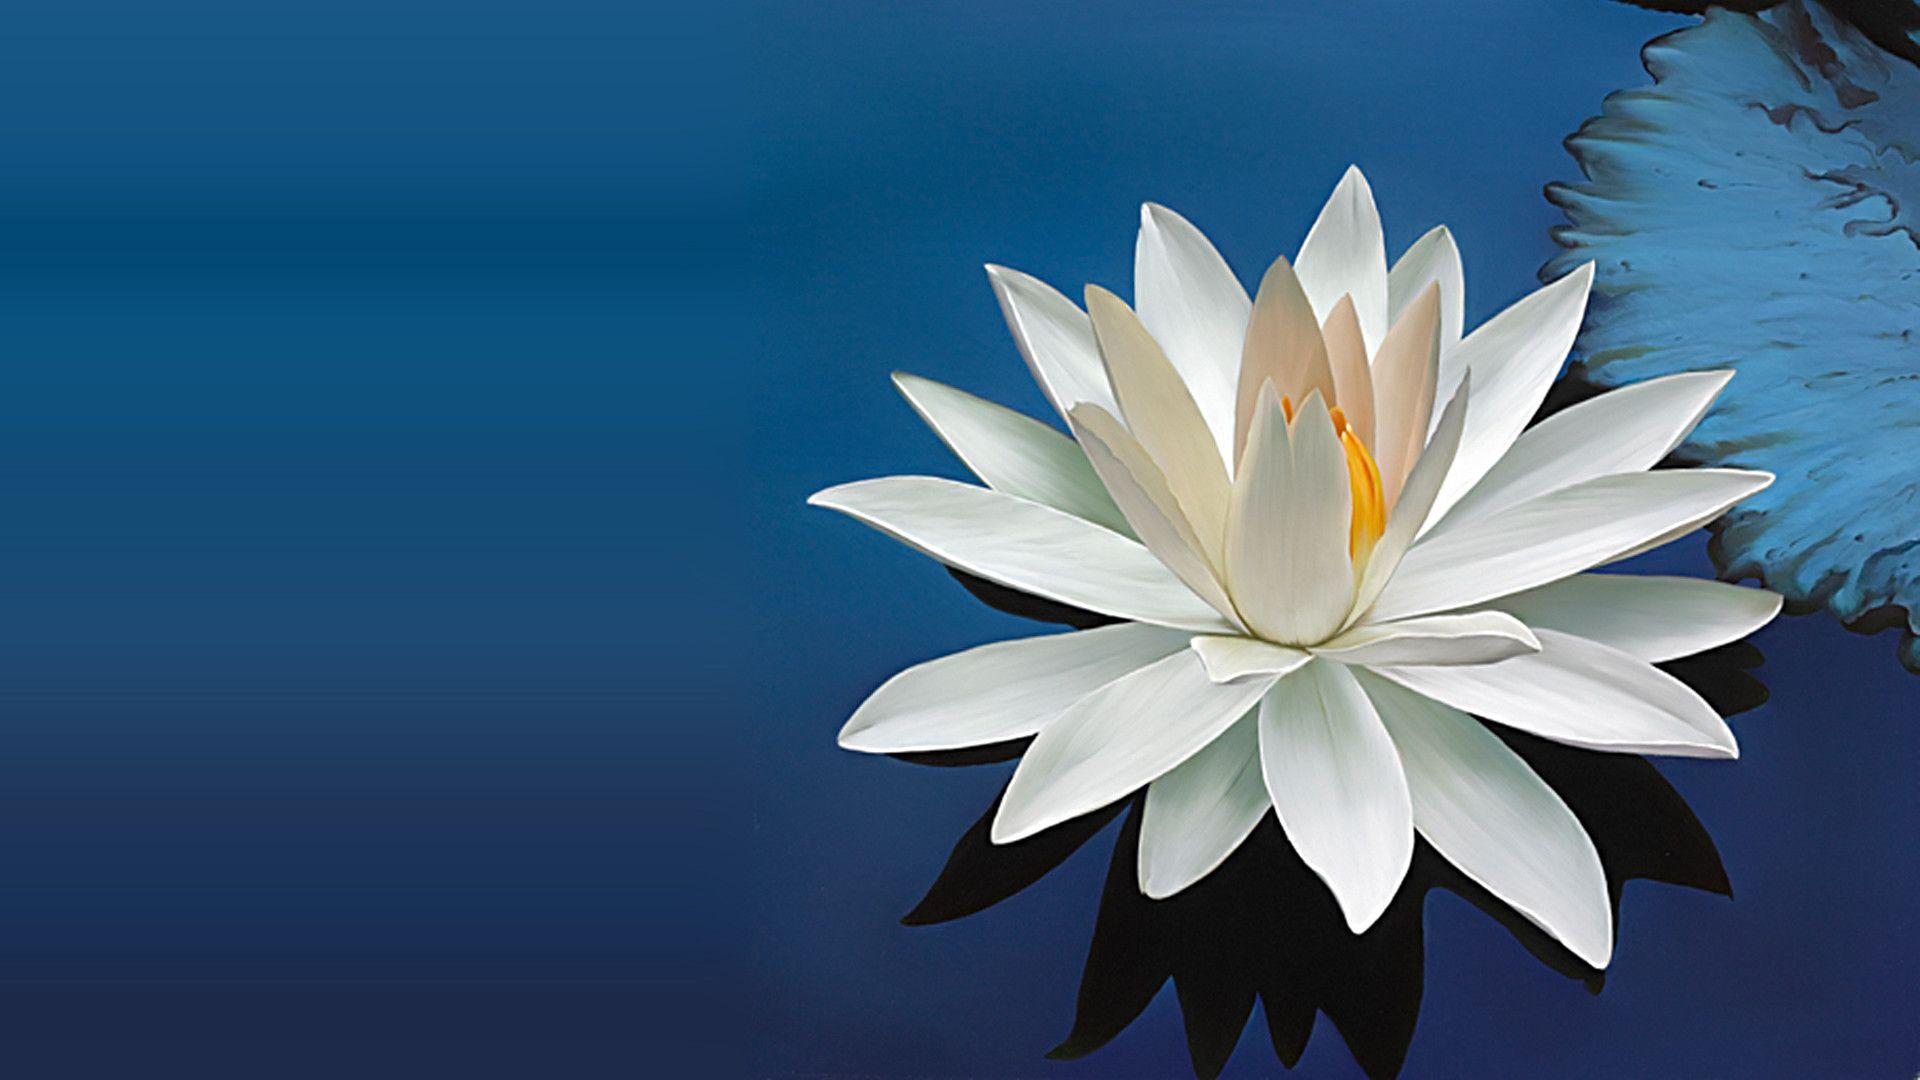 Lotus Flower Wallpapers - Top Free Lotus Flower Backgrounds